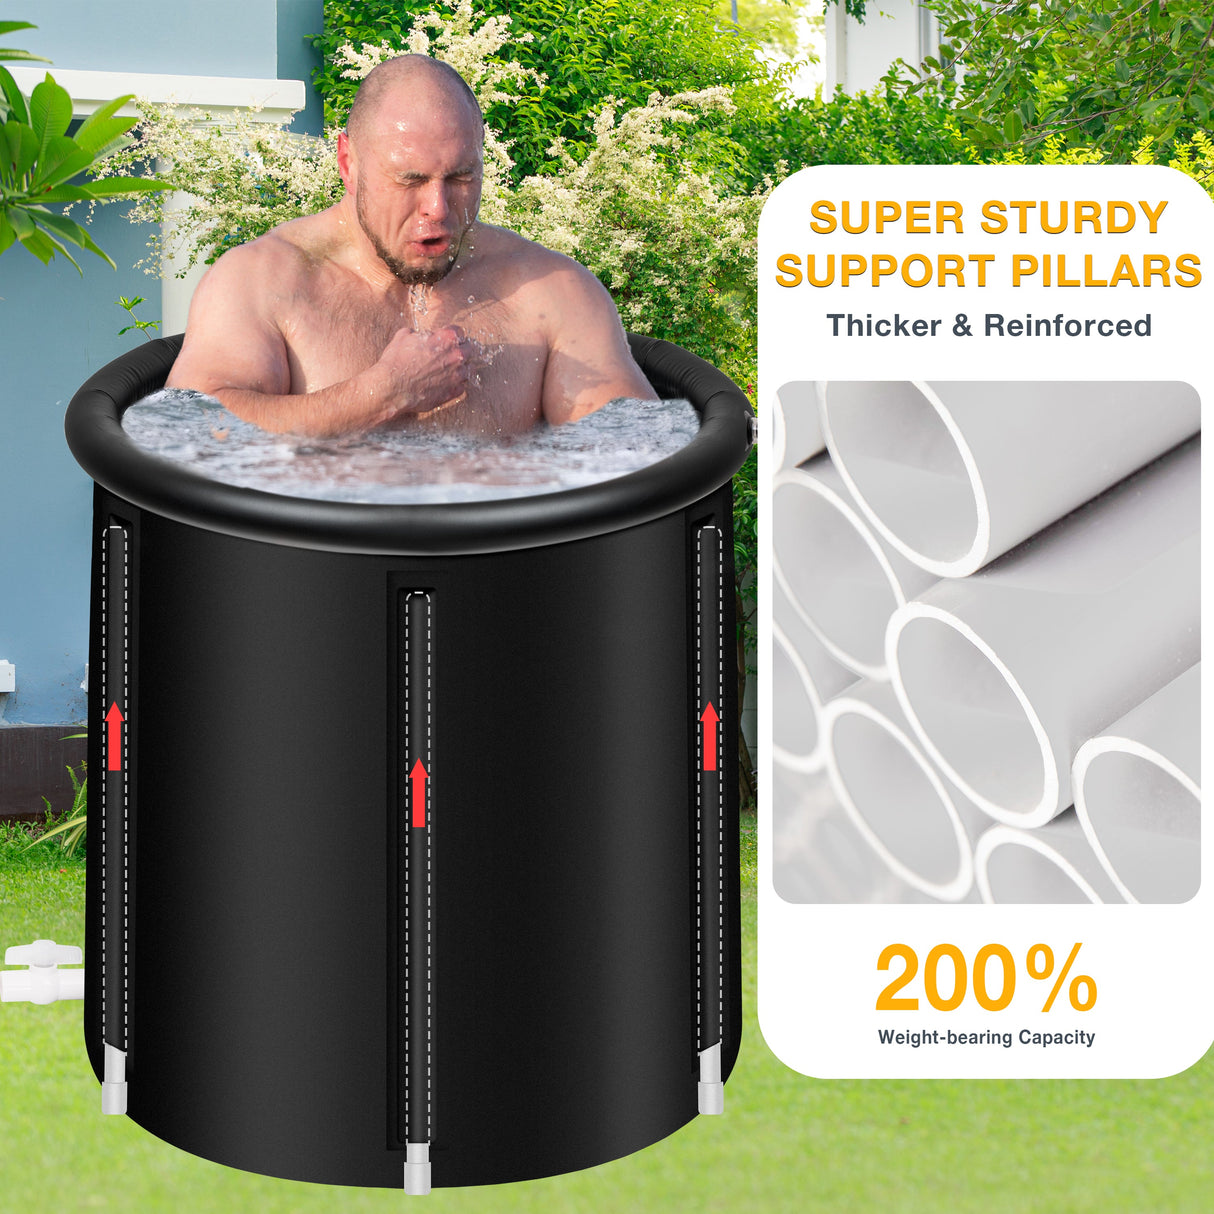 JEKOSEN Ice Bath Tub for Athletes - Portable 85 Gallons Freestanding Bathtub - Indoor/Outdoor - 29.5"x 29.5" - GexWorldwide